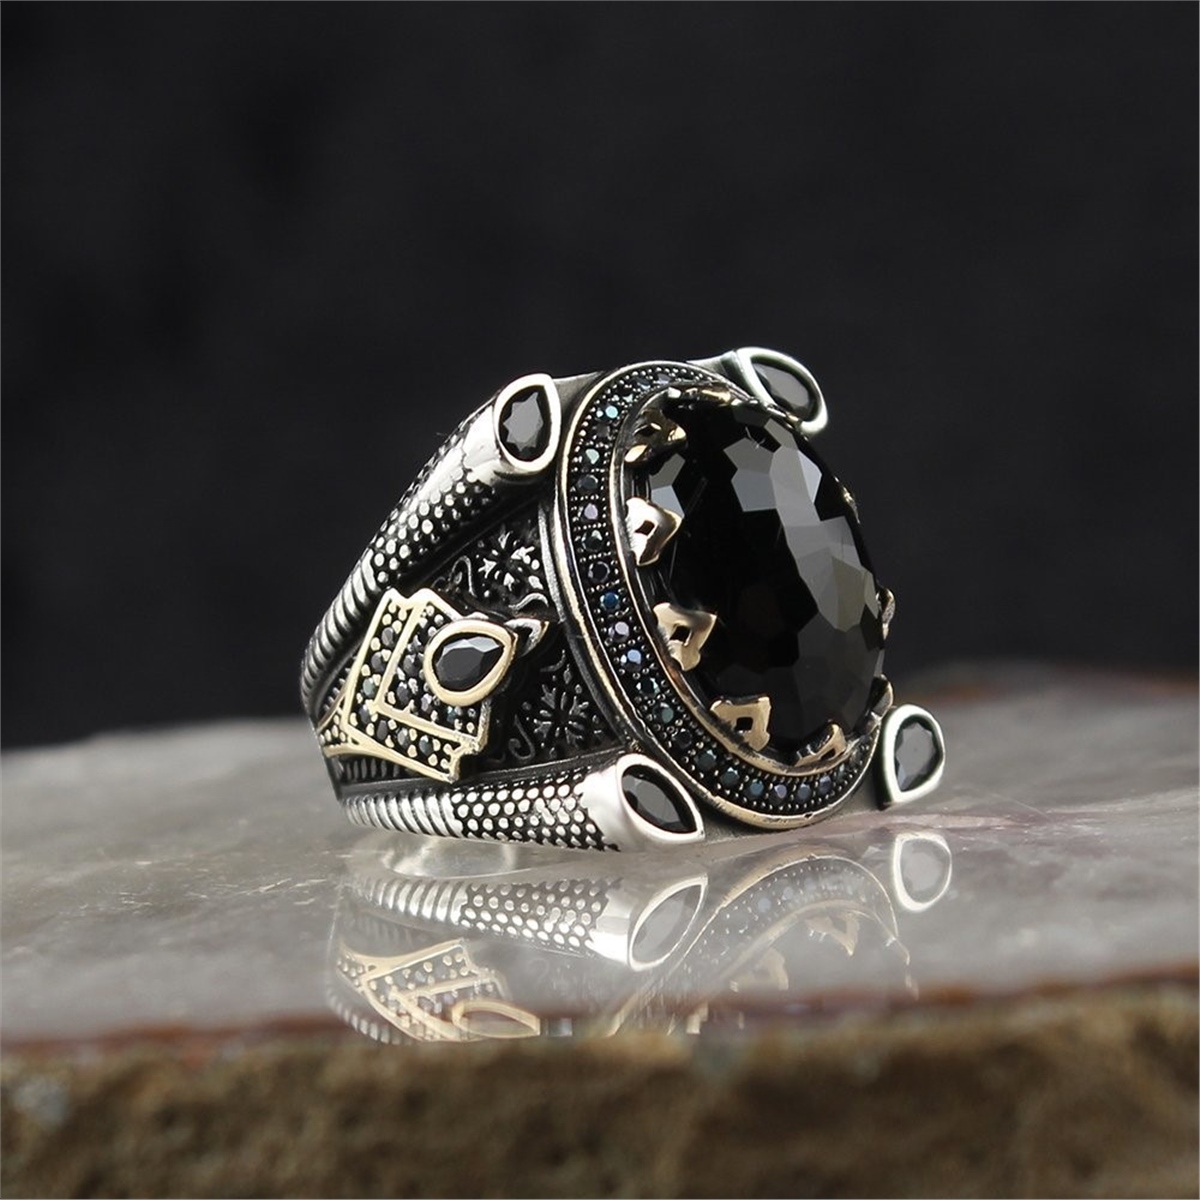 Black Zircon Stone 925 Sterling Silver Men's Ring